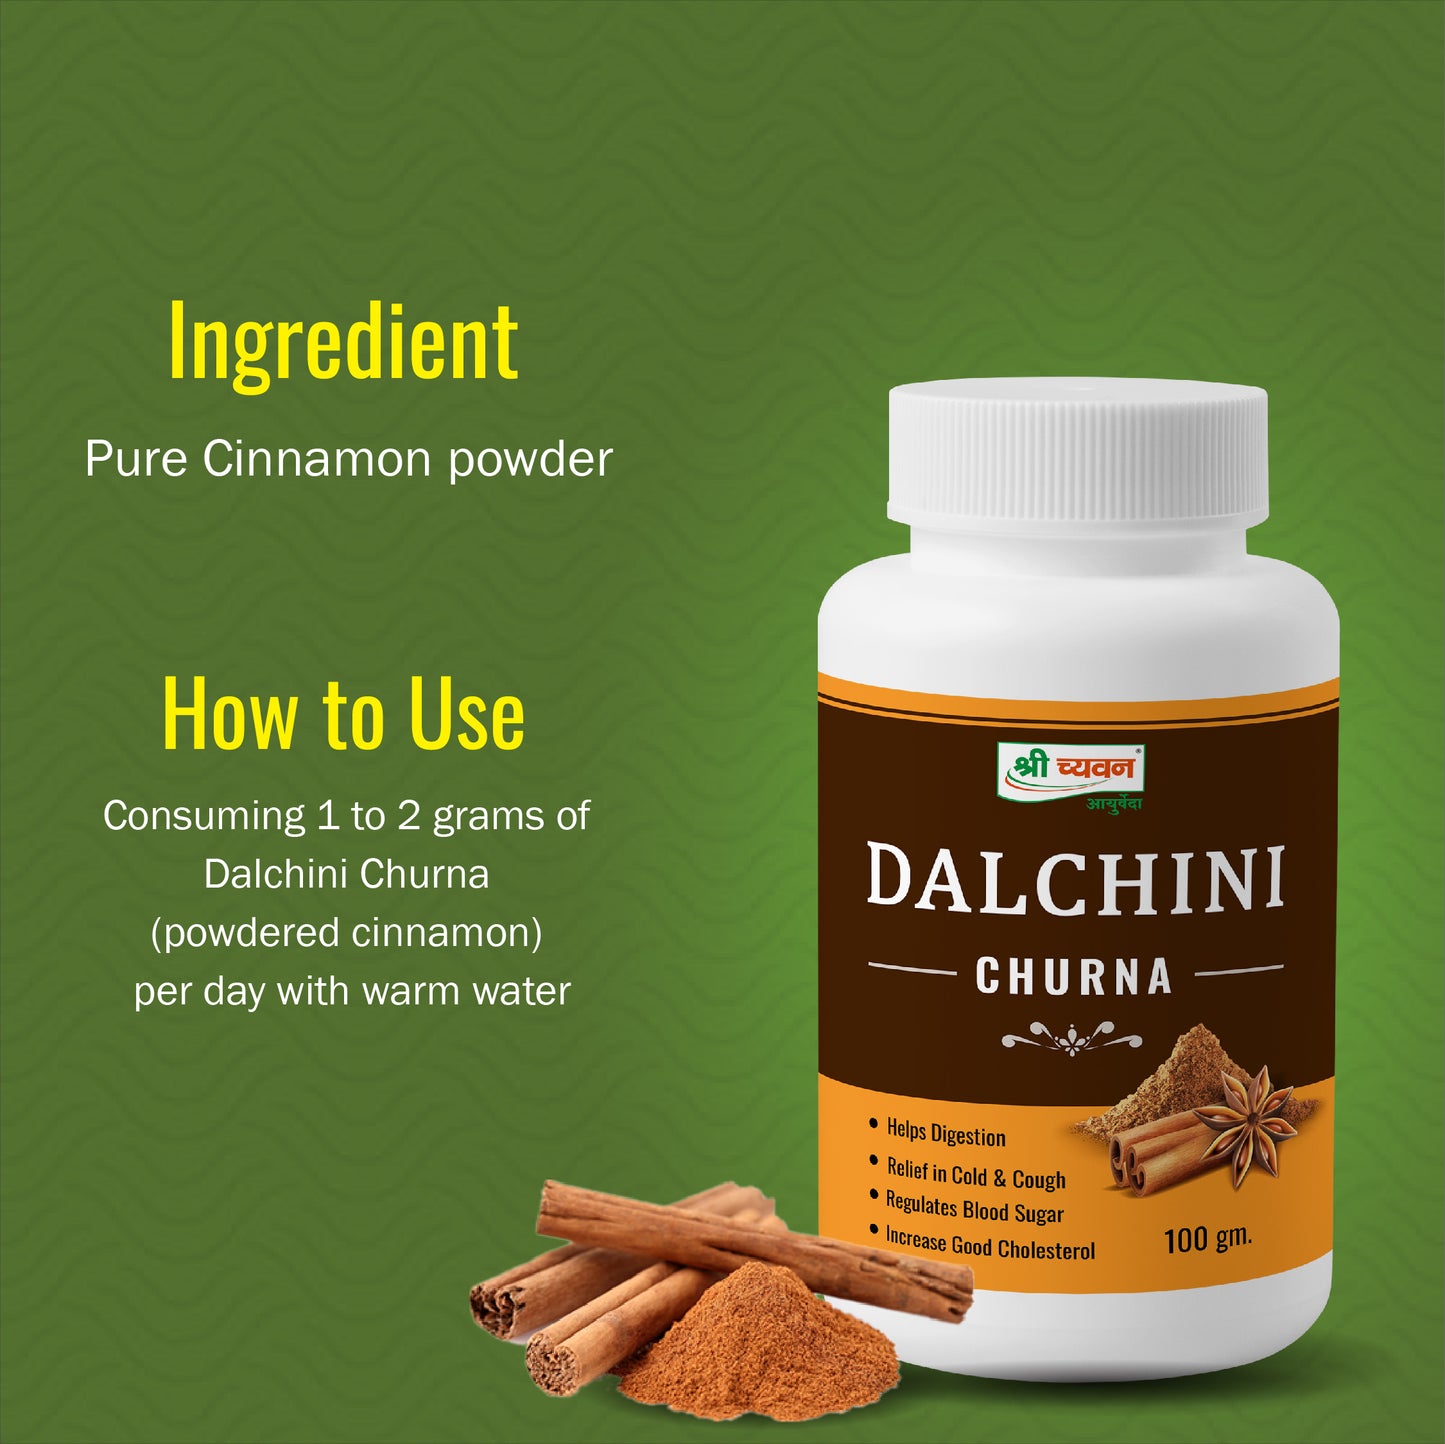 Dalchini Churna Ingredients